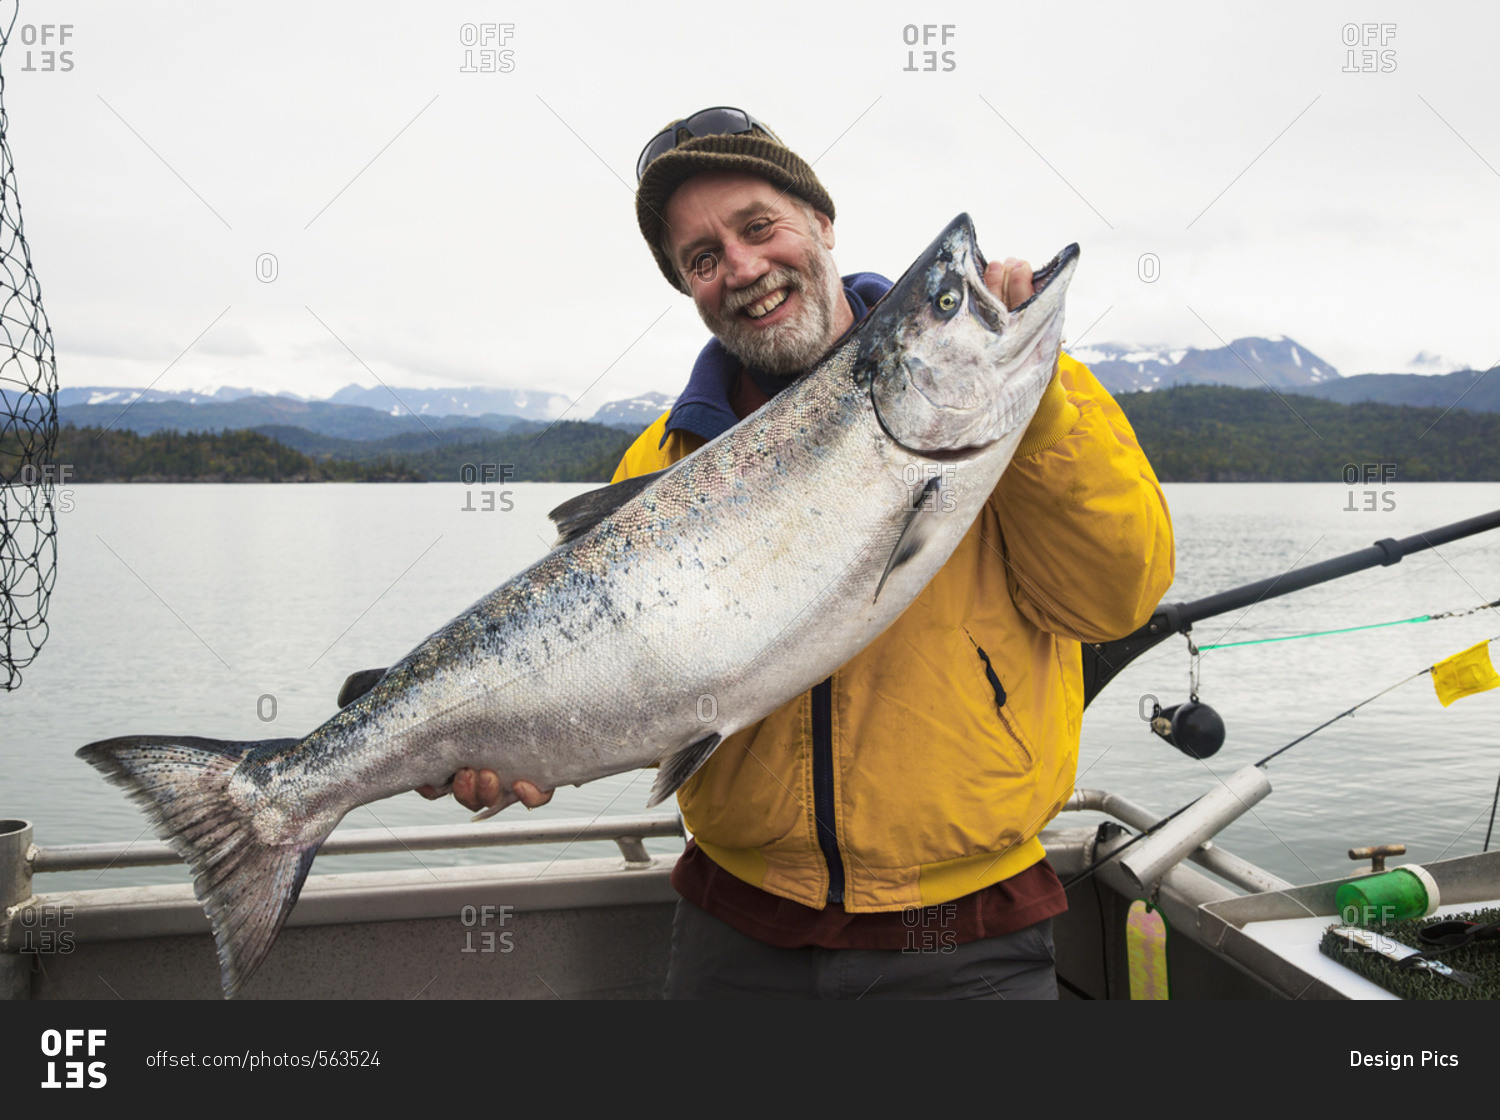 Success catching King Salmon (Chinook Salmon) (Oncorhynchus tshawytscha) near Homer, Alaska in Kachemak Bay, Alaska, United States of America